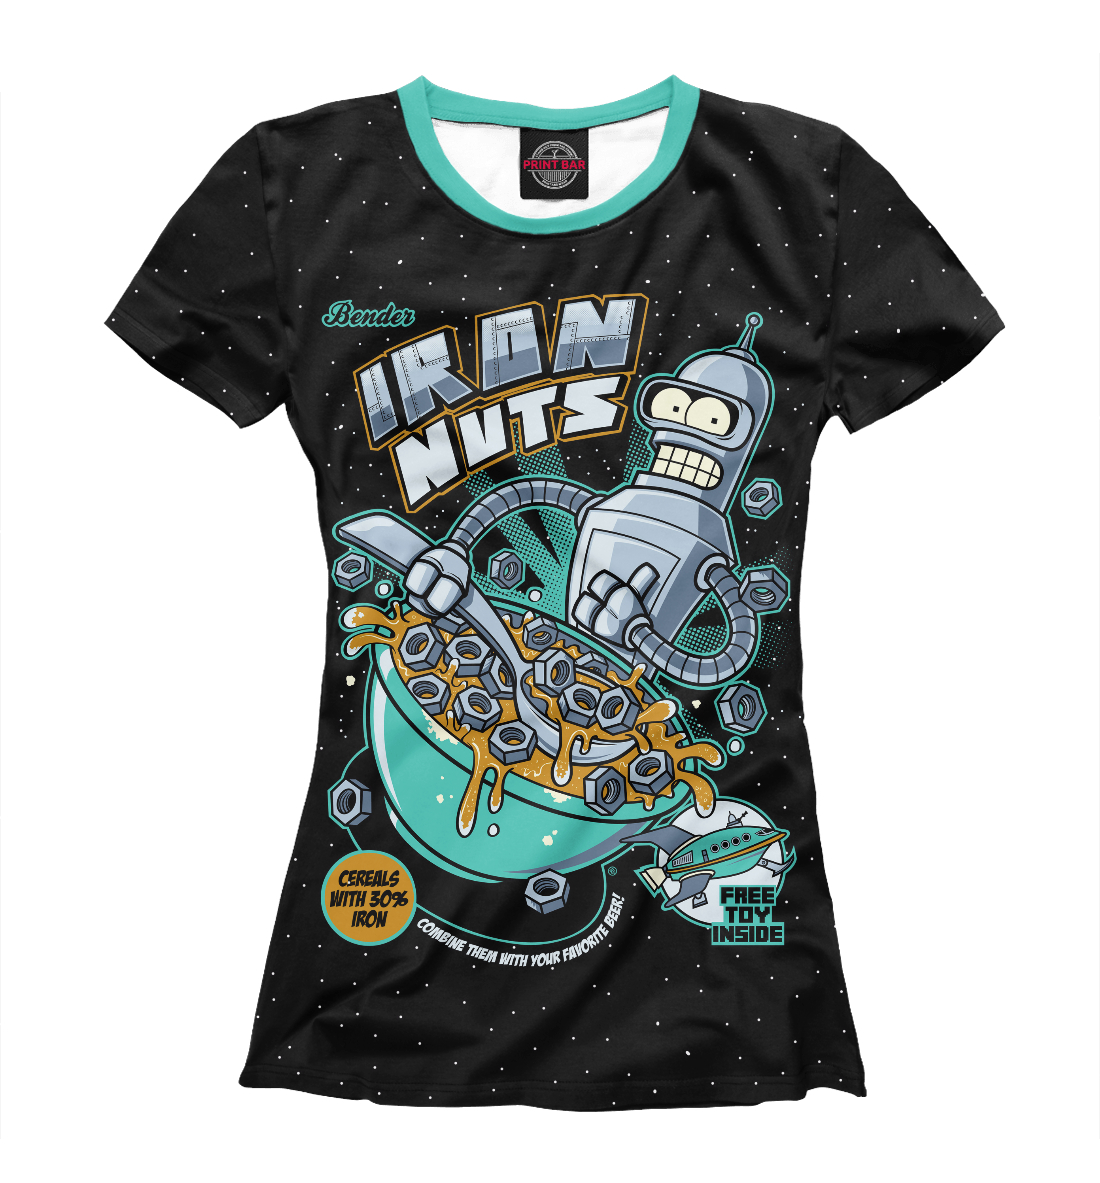 Футболка Iron Nuts для девочек, артикул: FUT-355756-fut-1mp